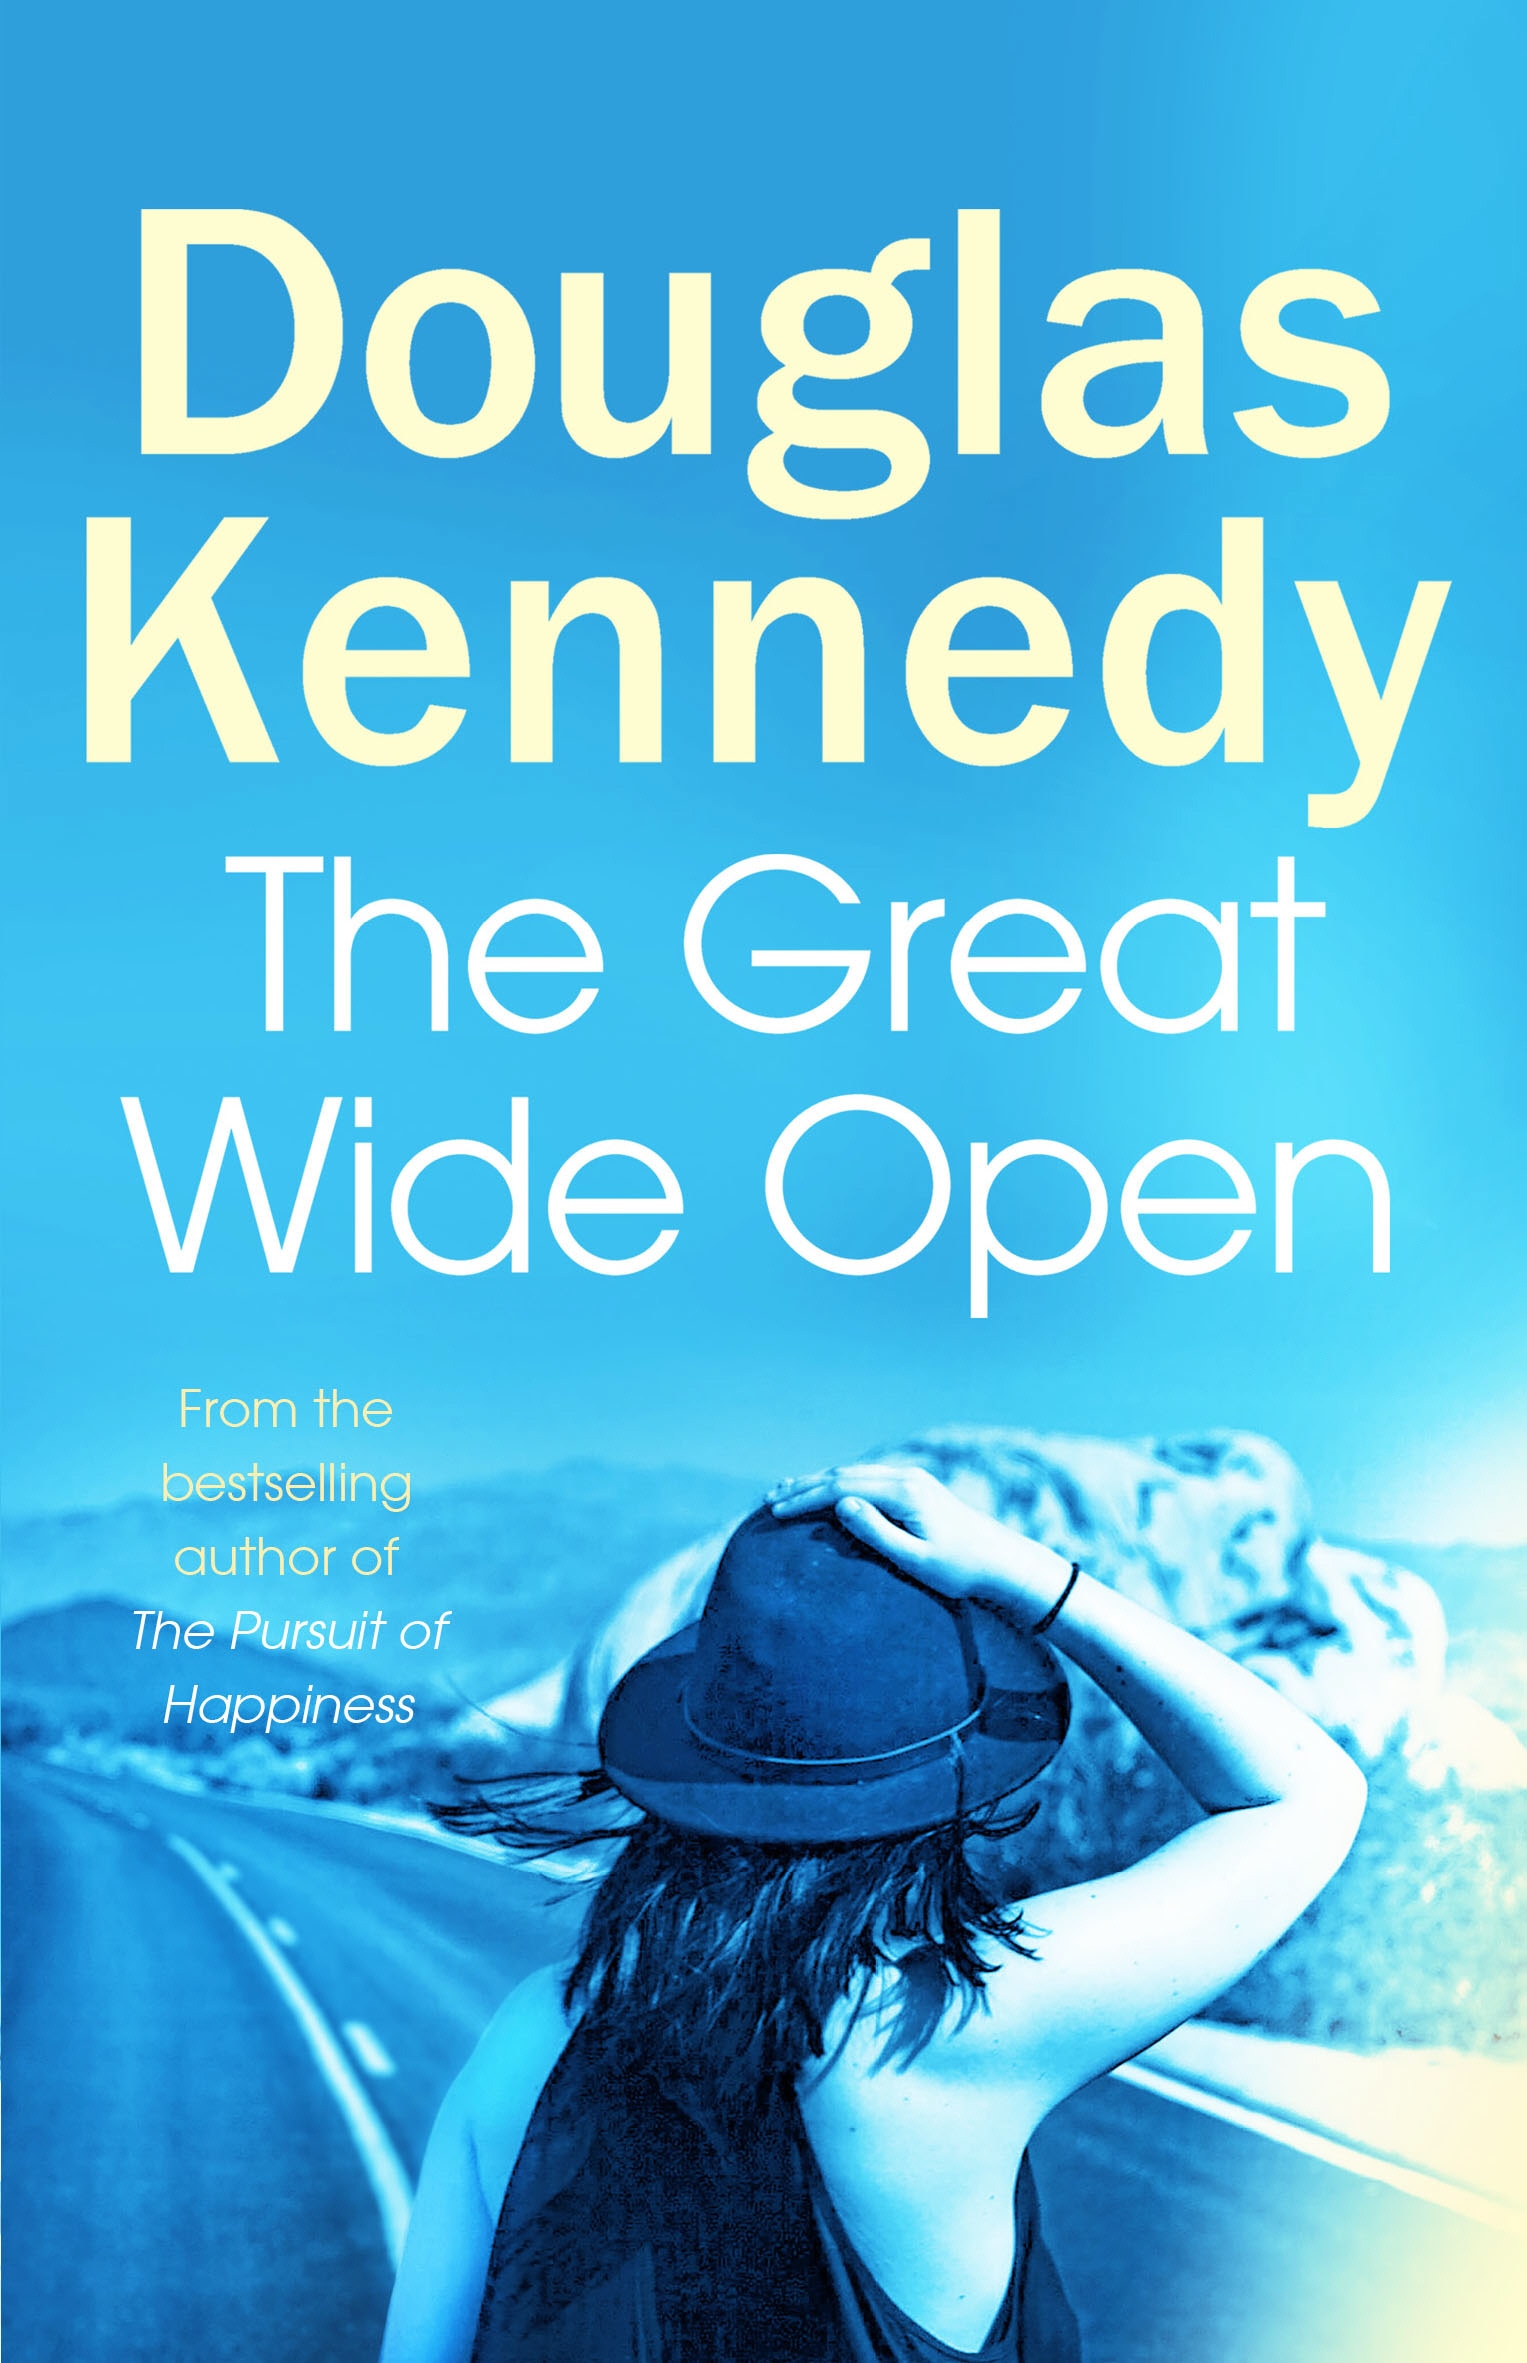 Book “The Great Wide Open” by Douglas Kennedy — July 25, 2019